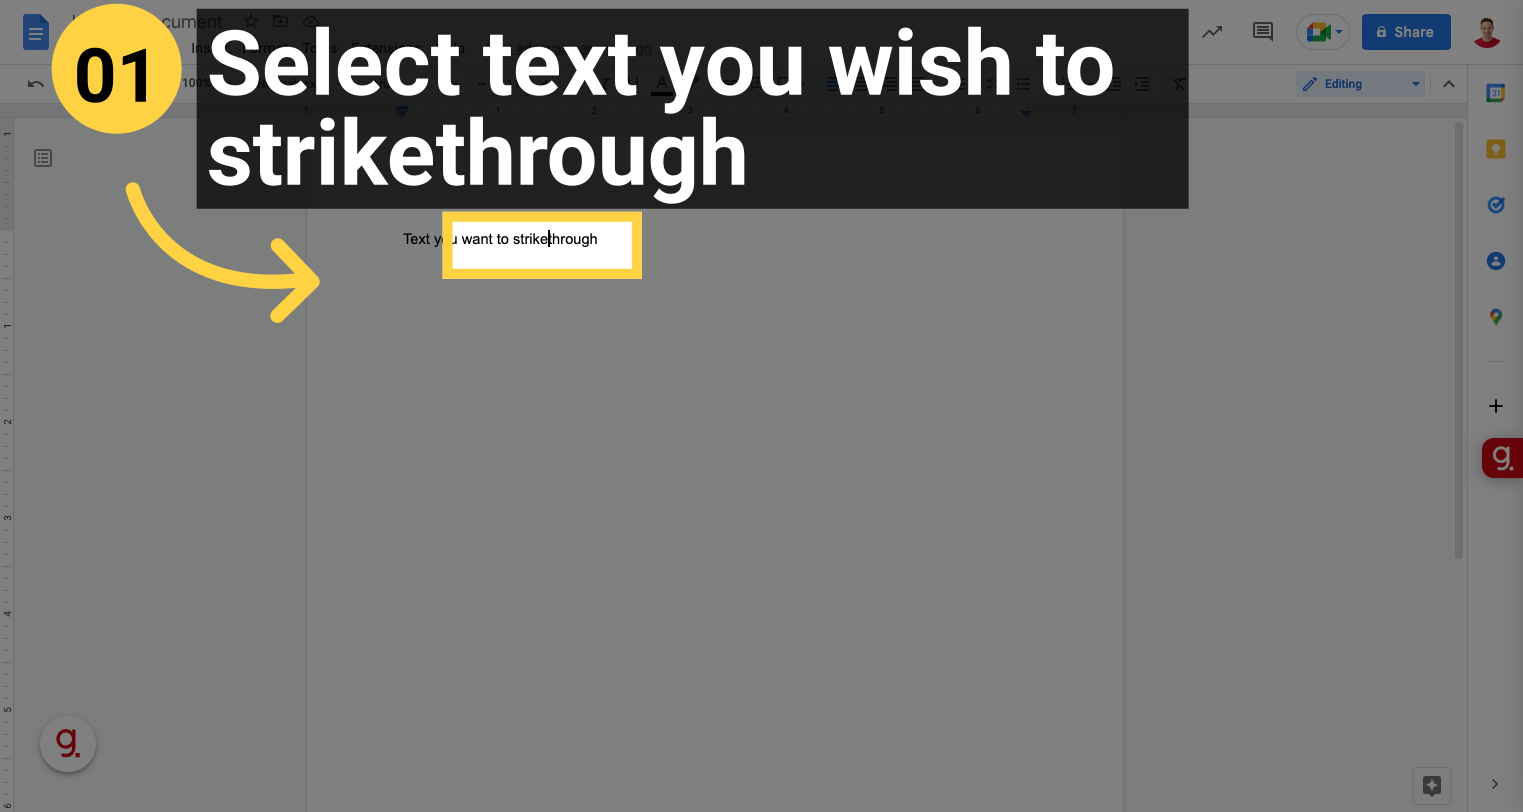 Select text you wish to strikethrough